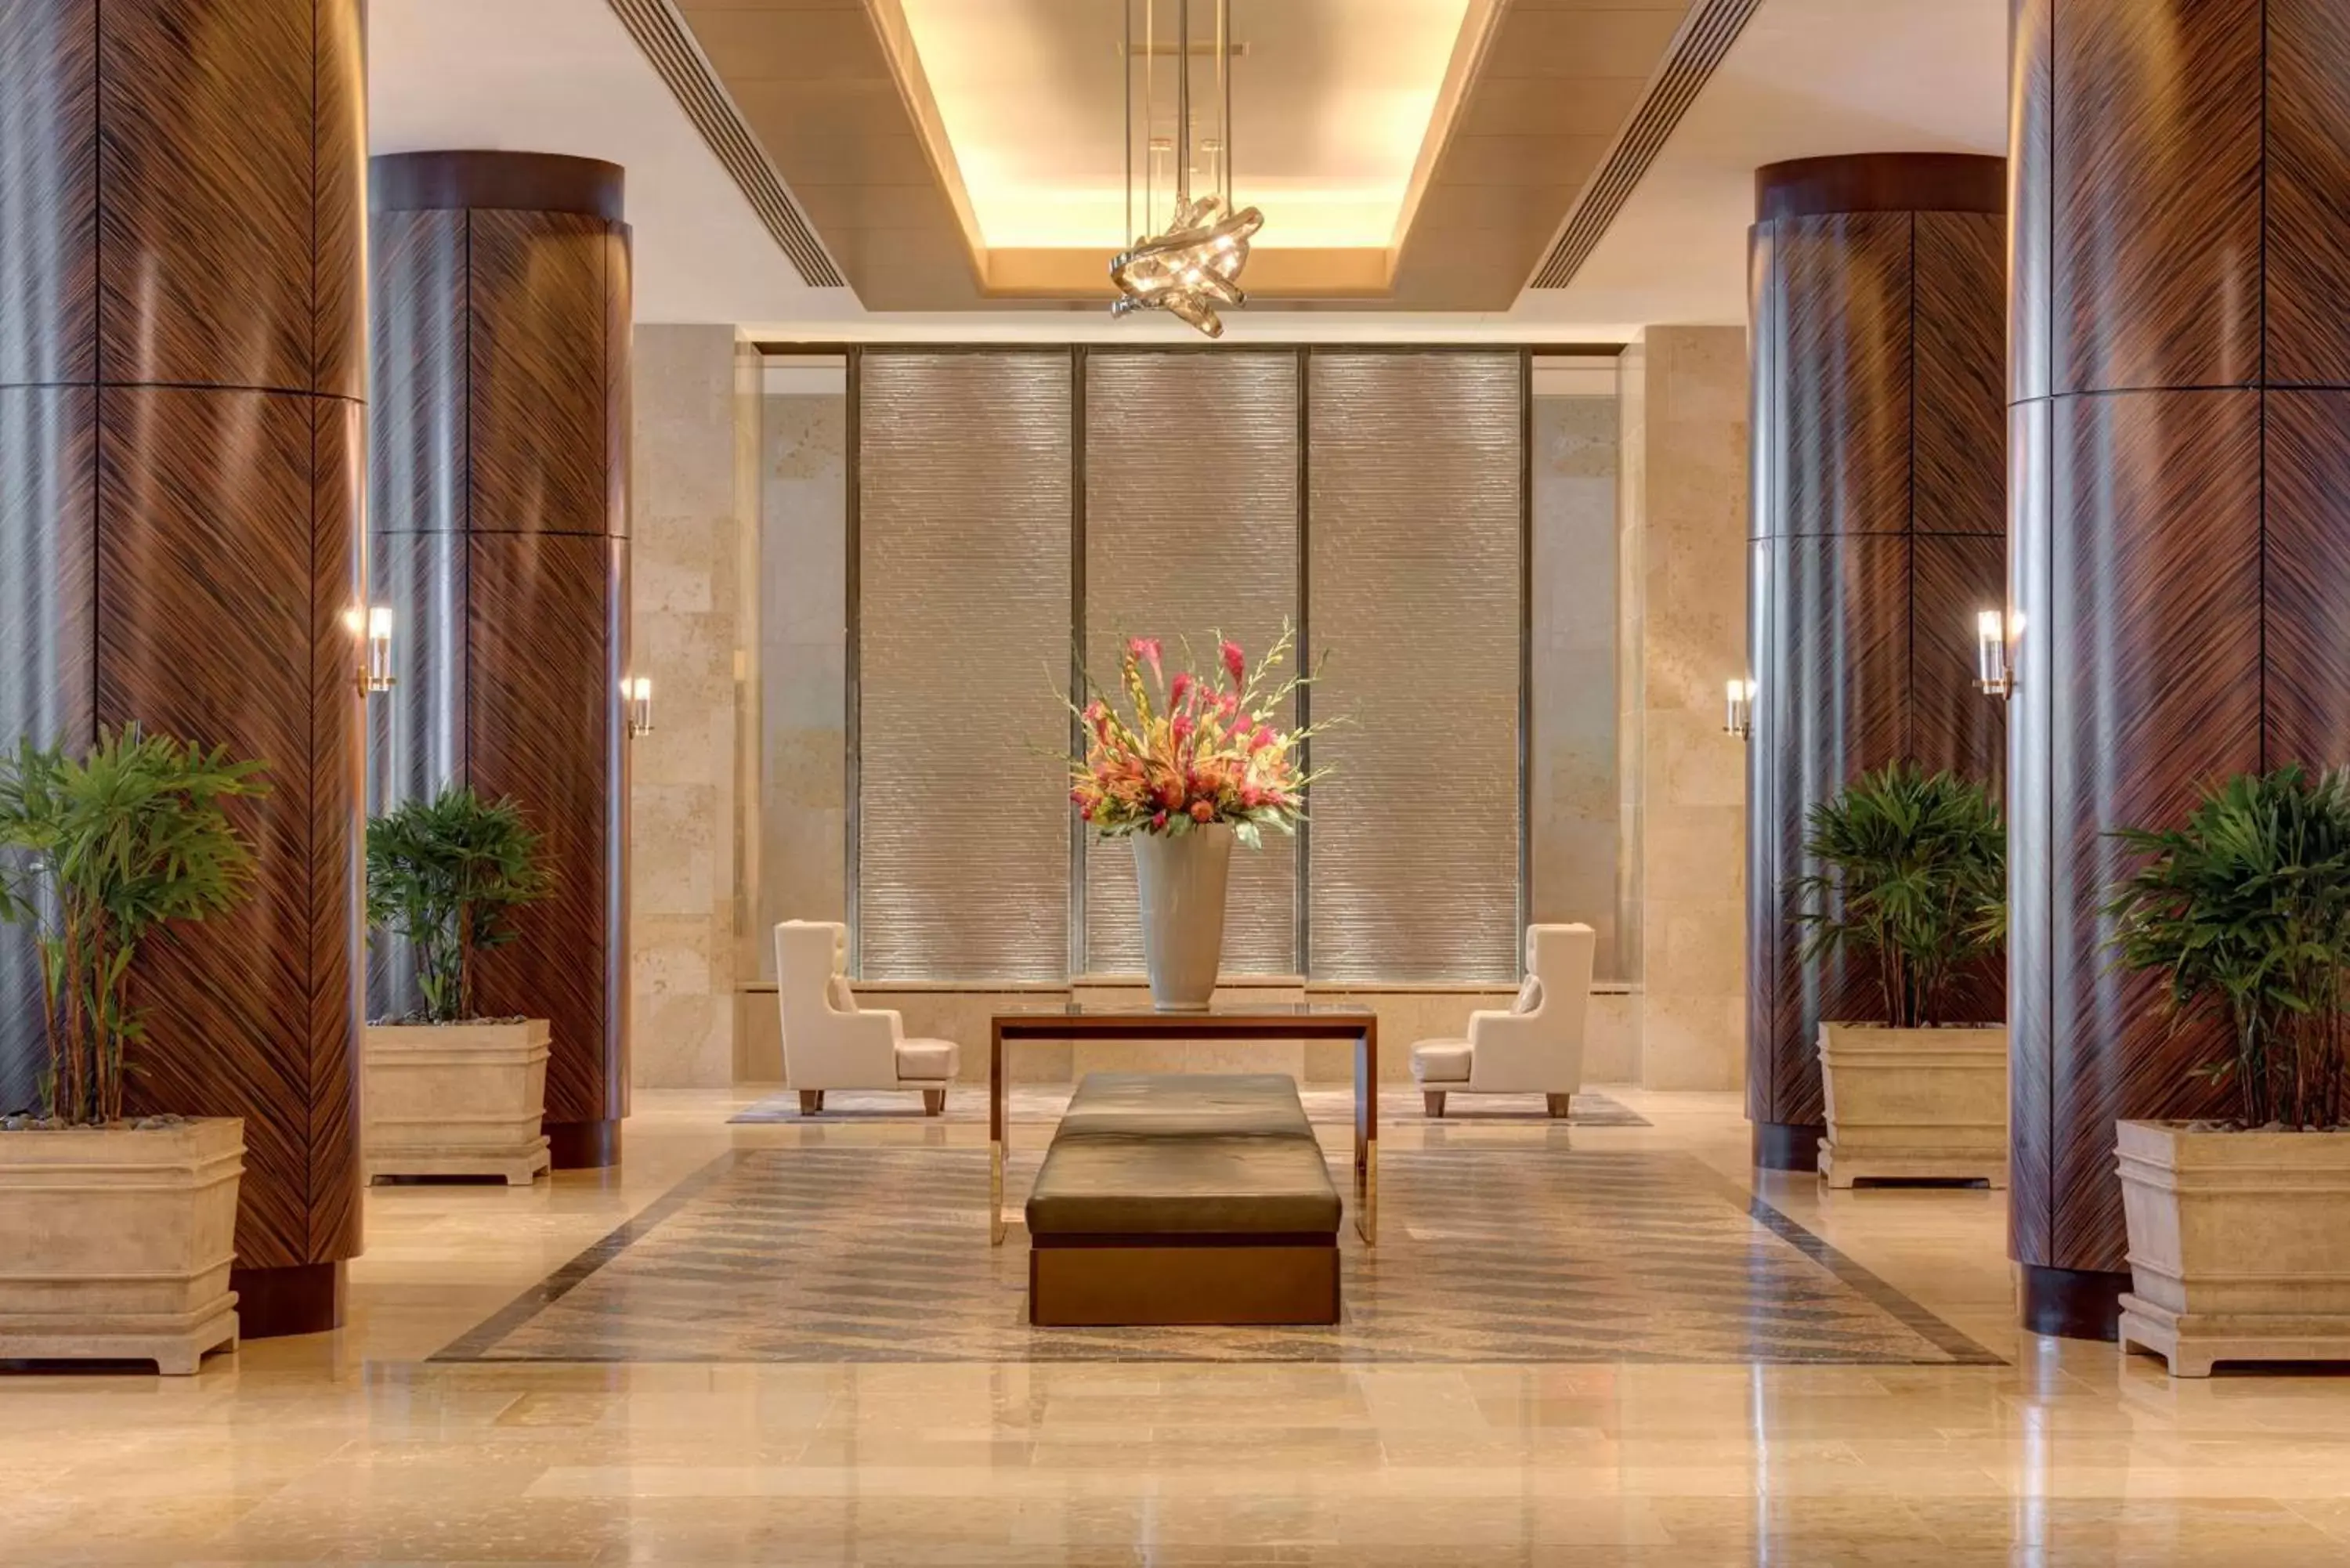 Lobby or reception in Hilton Americas- Houston